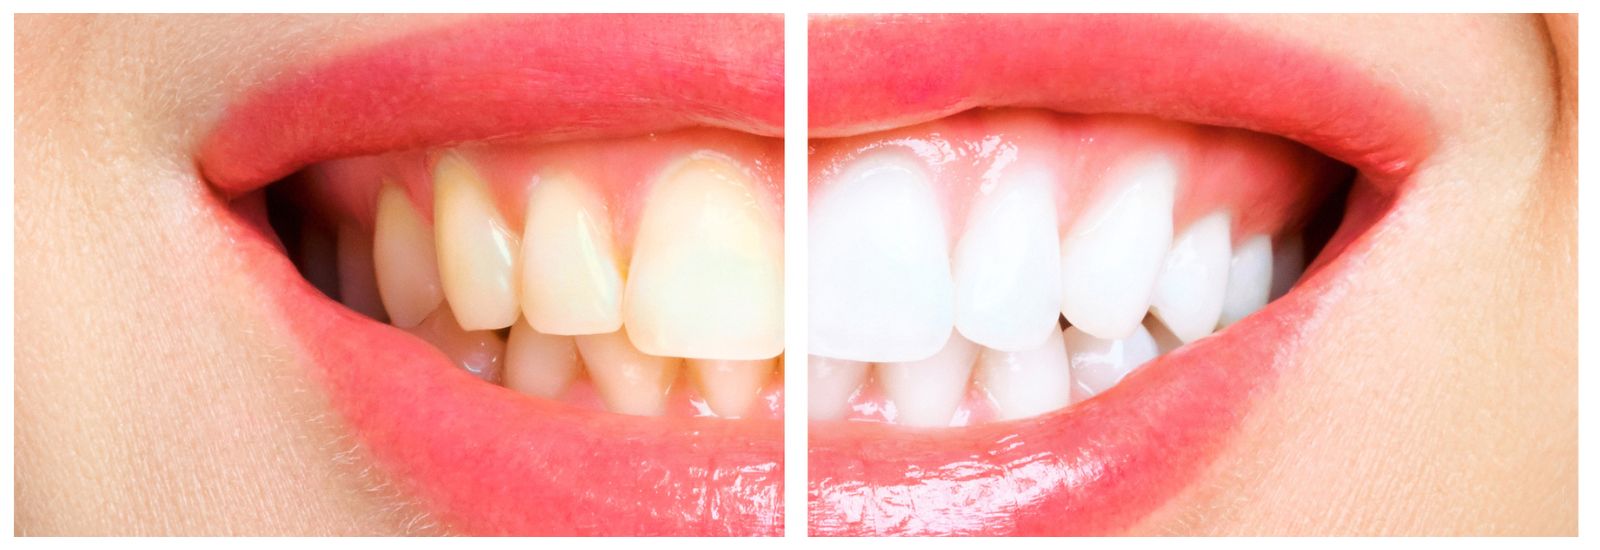 Teeth whitening color comparison